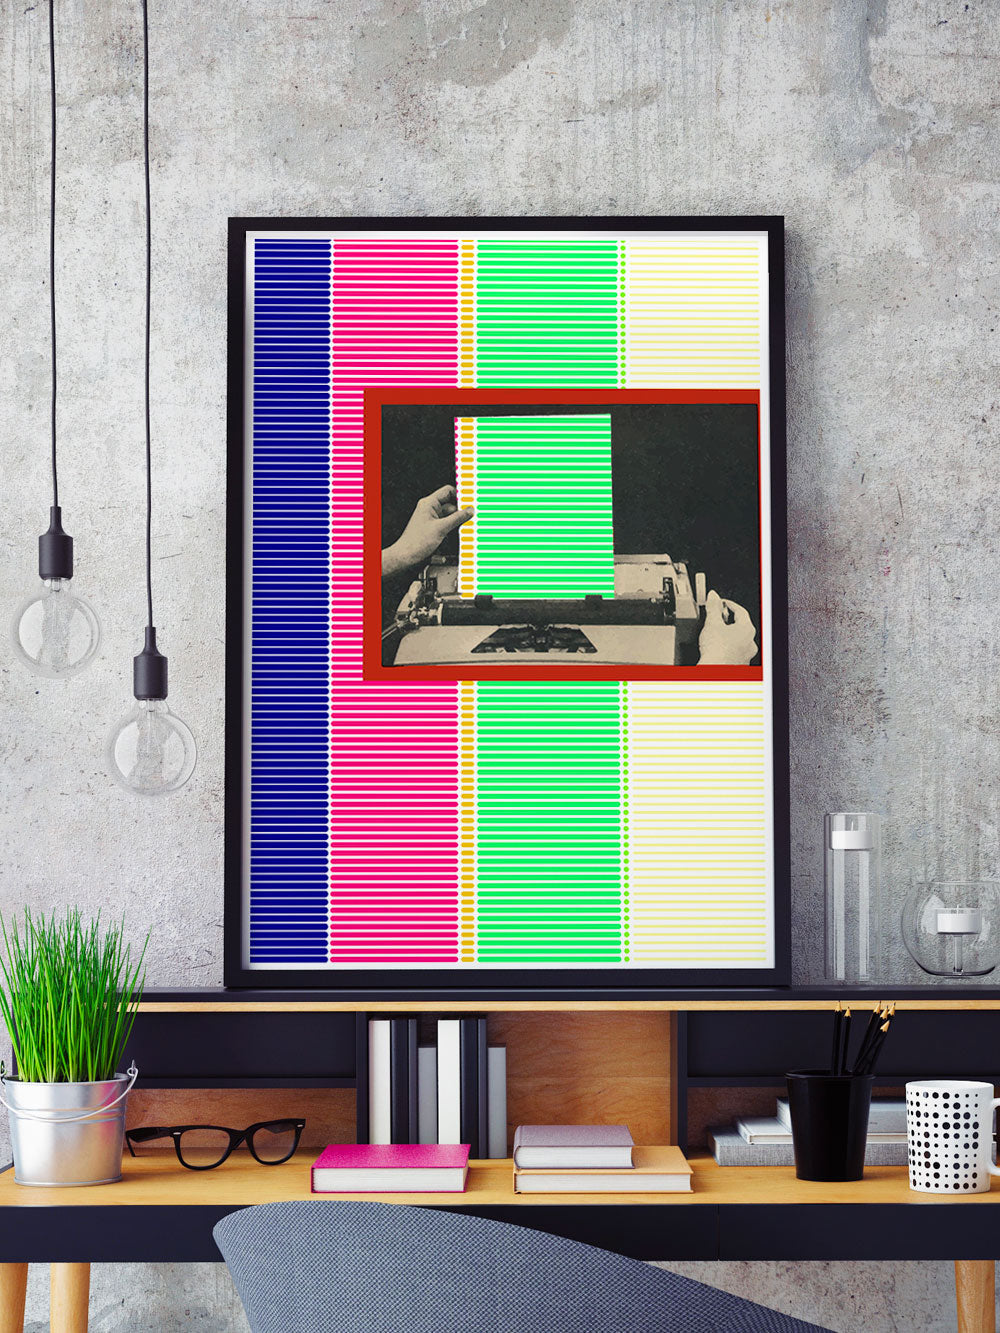 Dotted Line Matrix Retro Art Print in a frame on a shelf